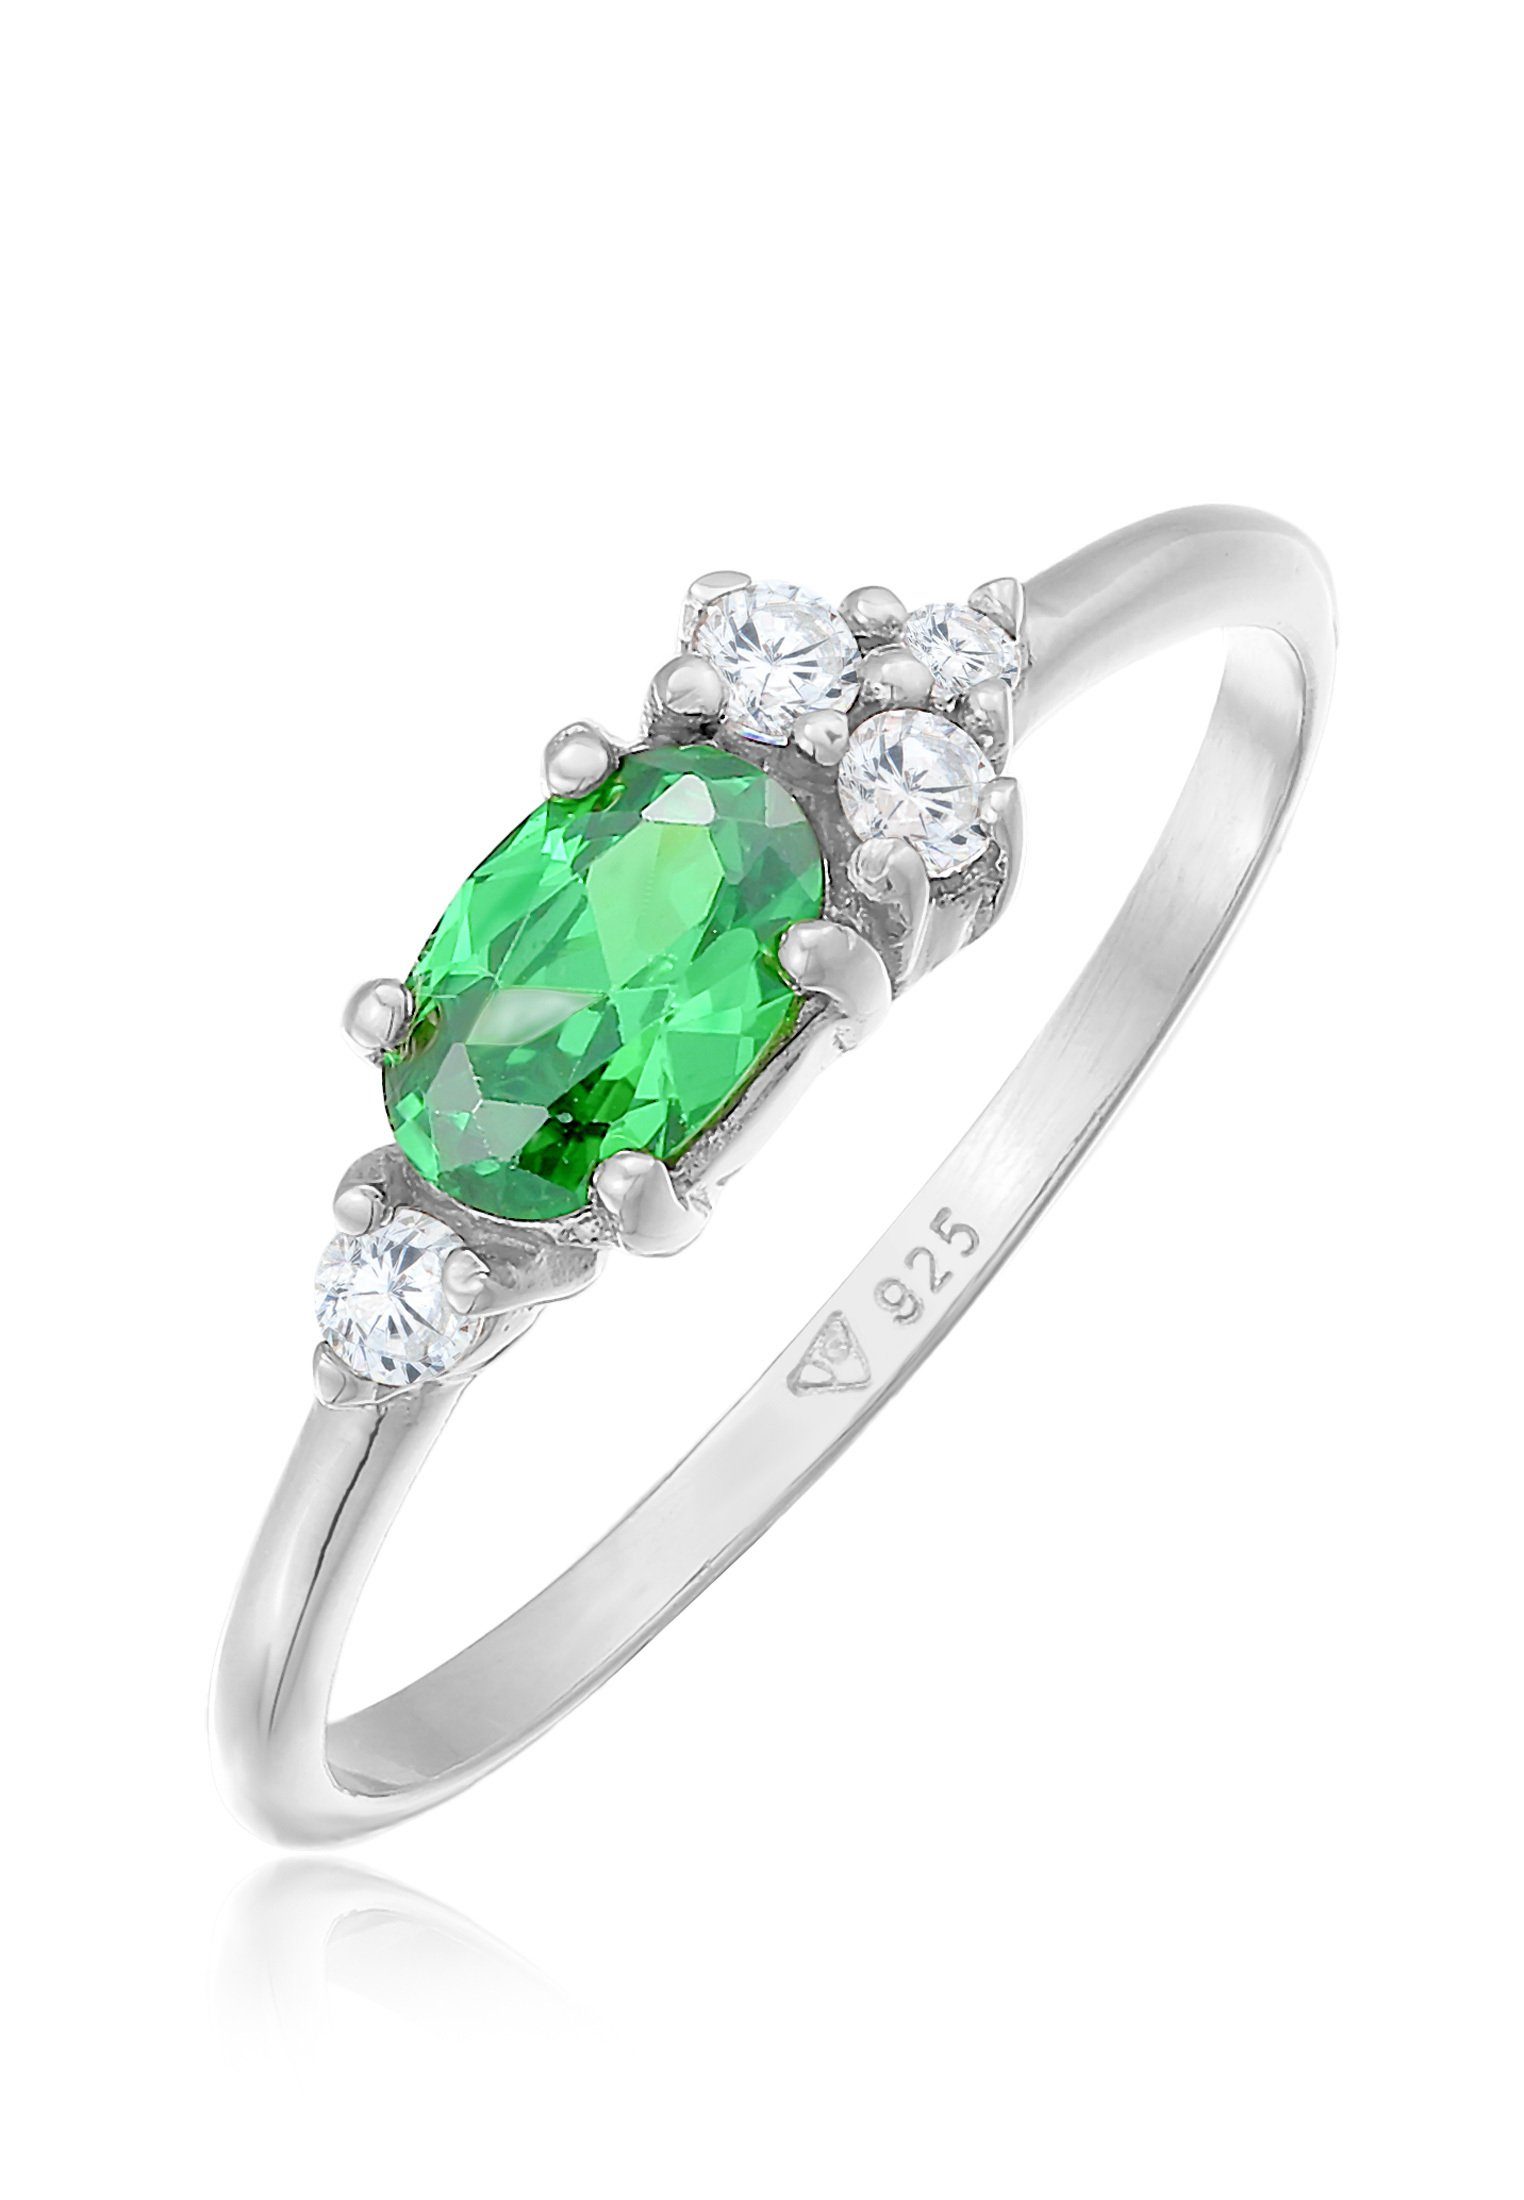 Elli Fingerring Verlobung Silber Zirkonia Grün 925 Smaragd